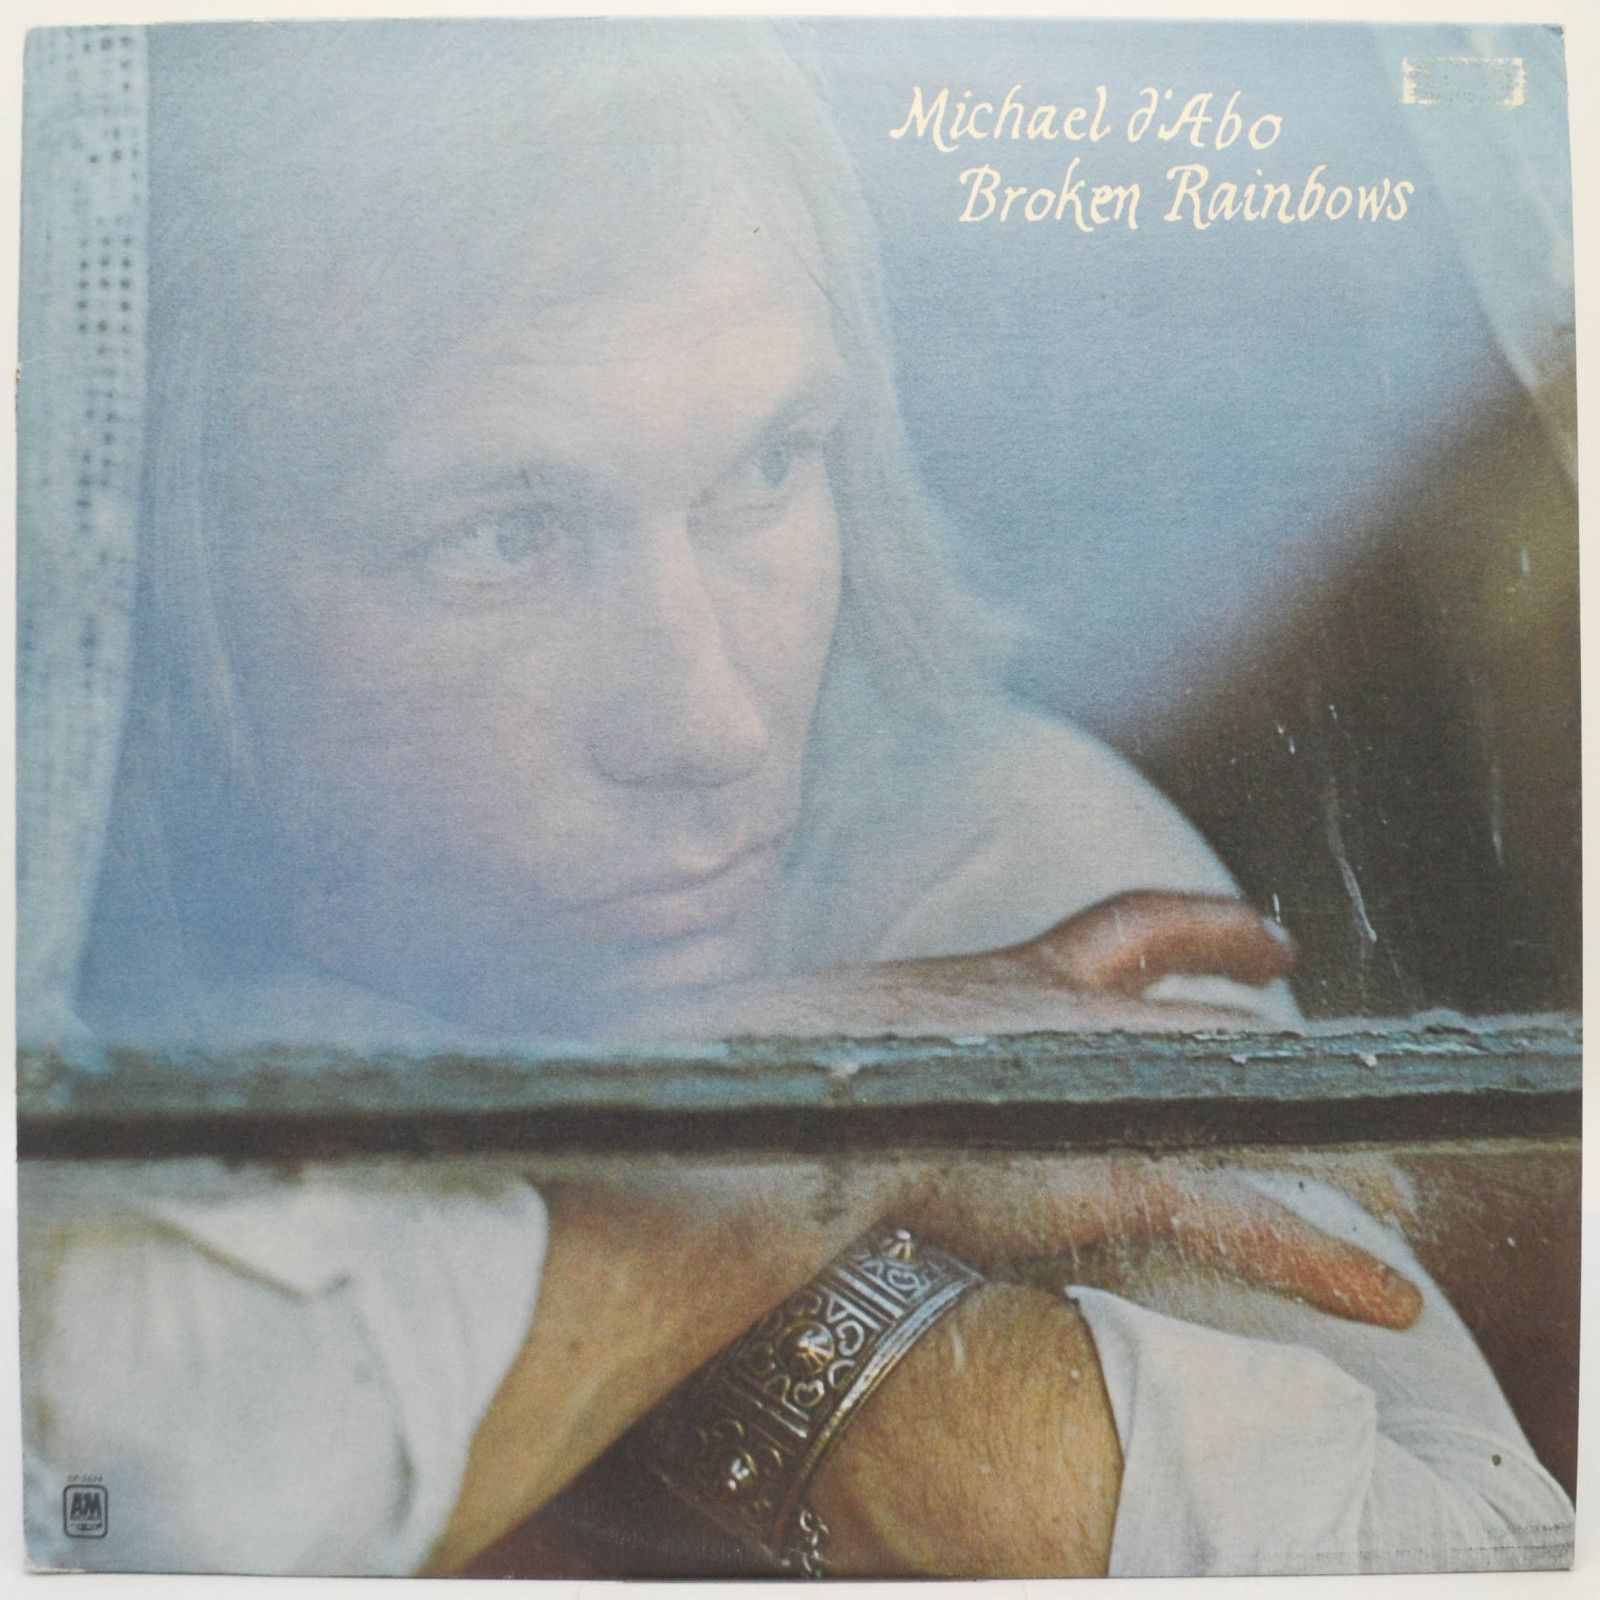 Michael D'Abo — Broken Rainbows, 1974